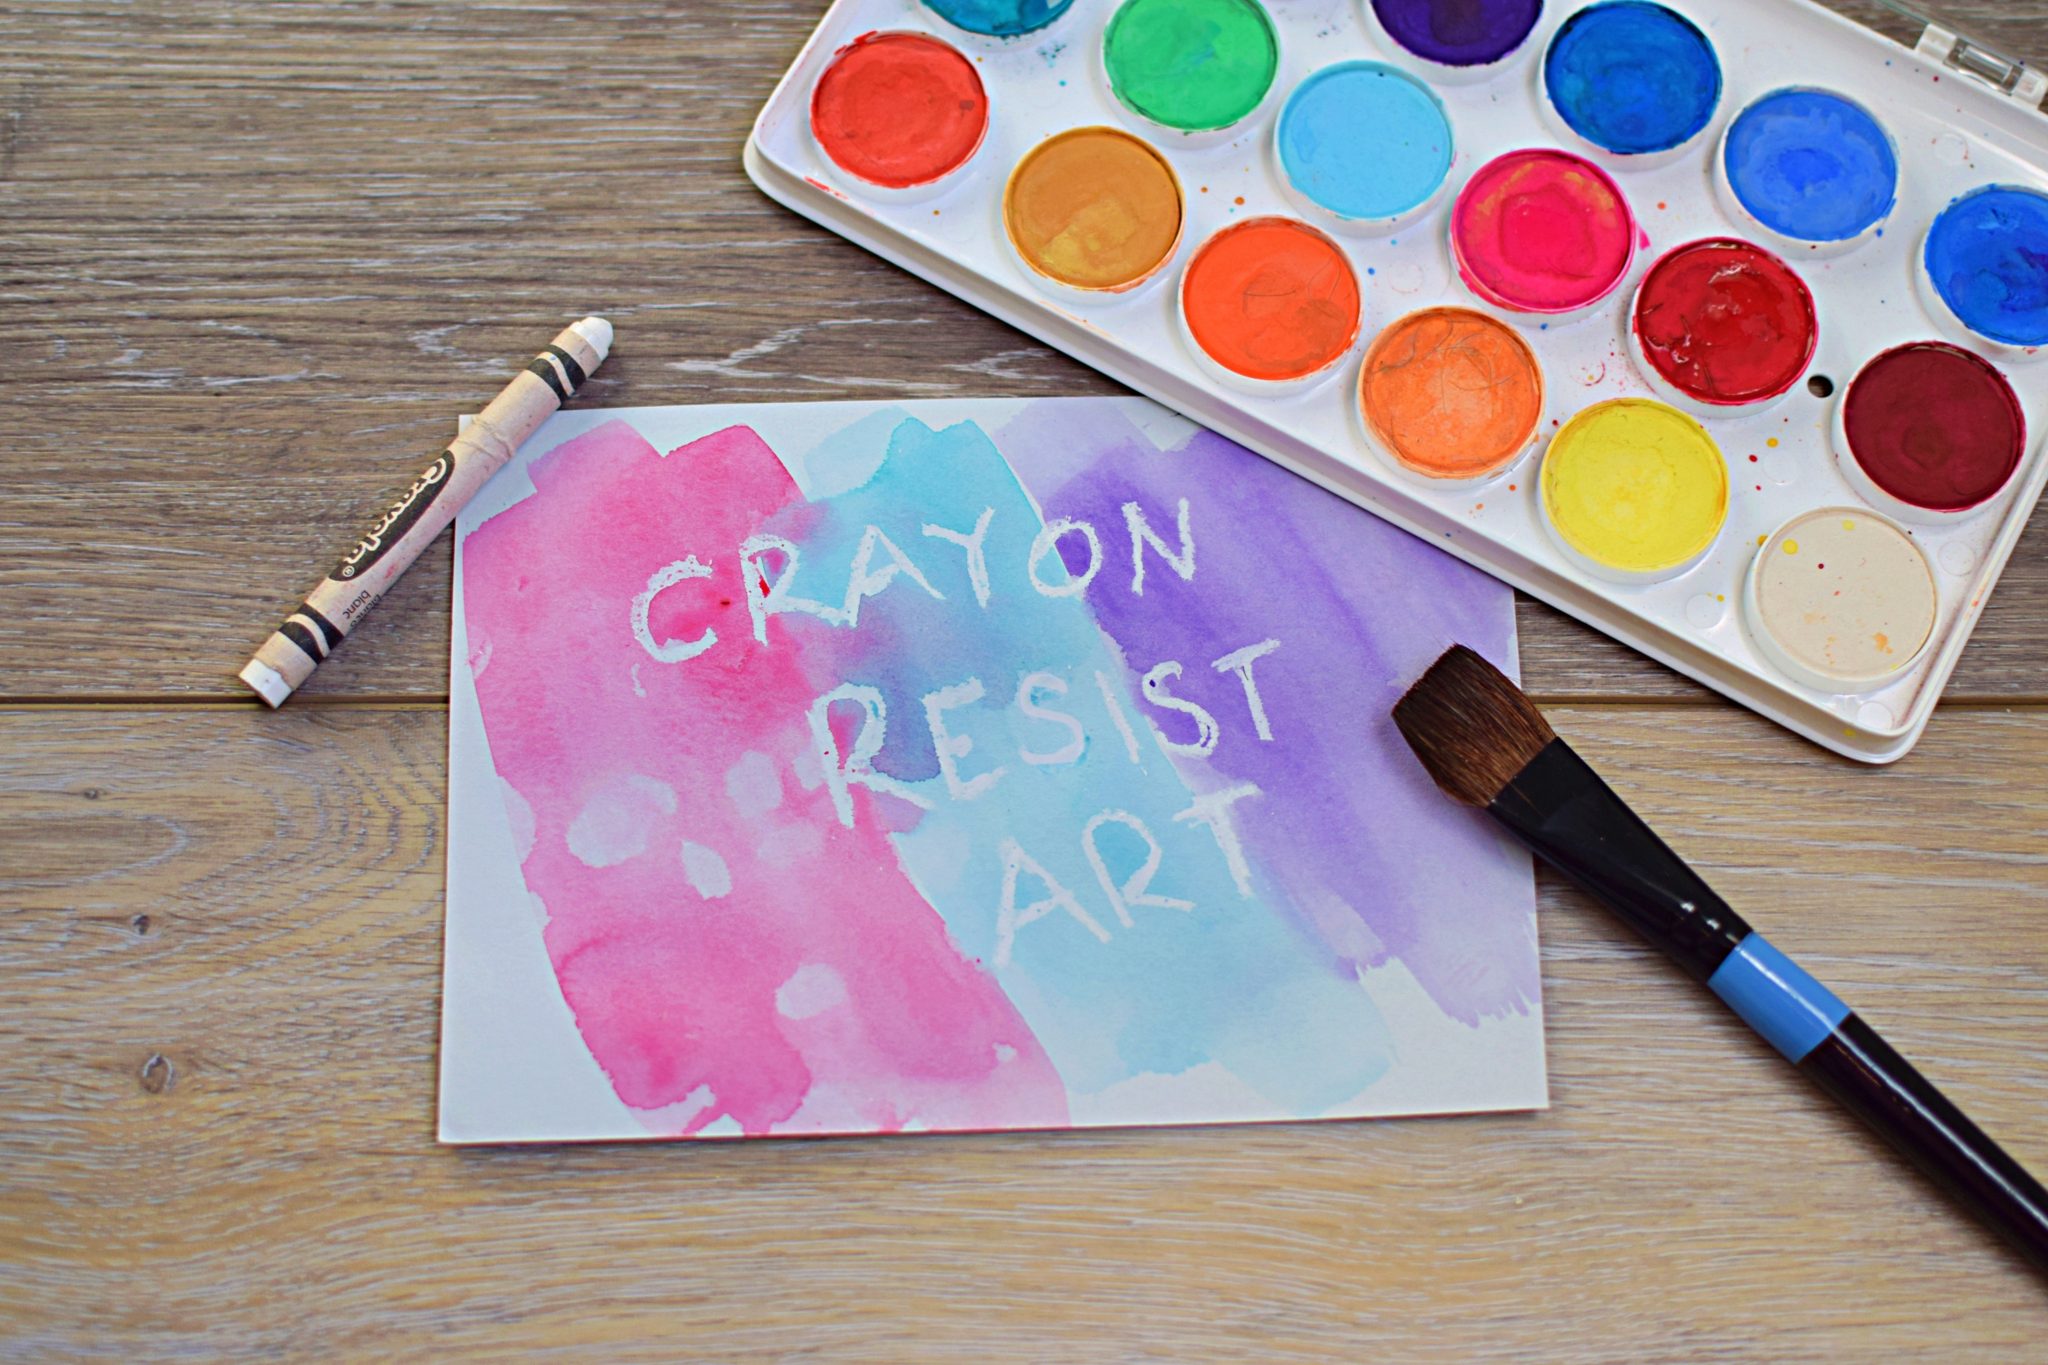 How to Make Crayon Resist Art 2020 | Entertain Your Toddler